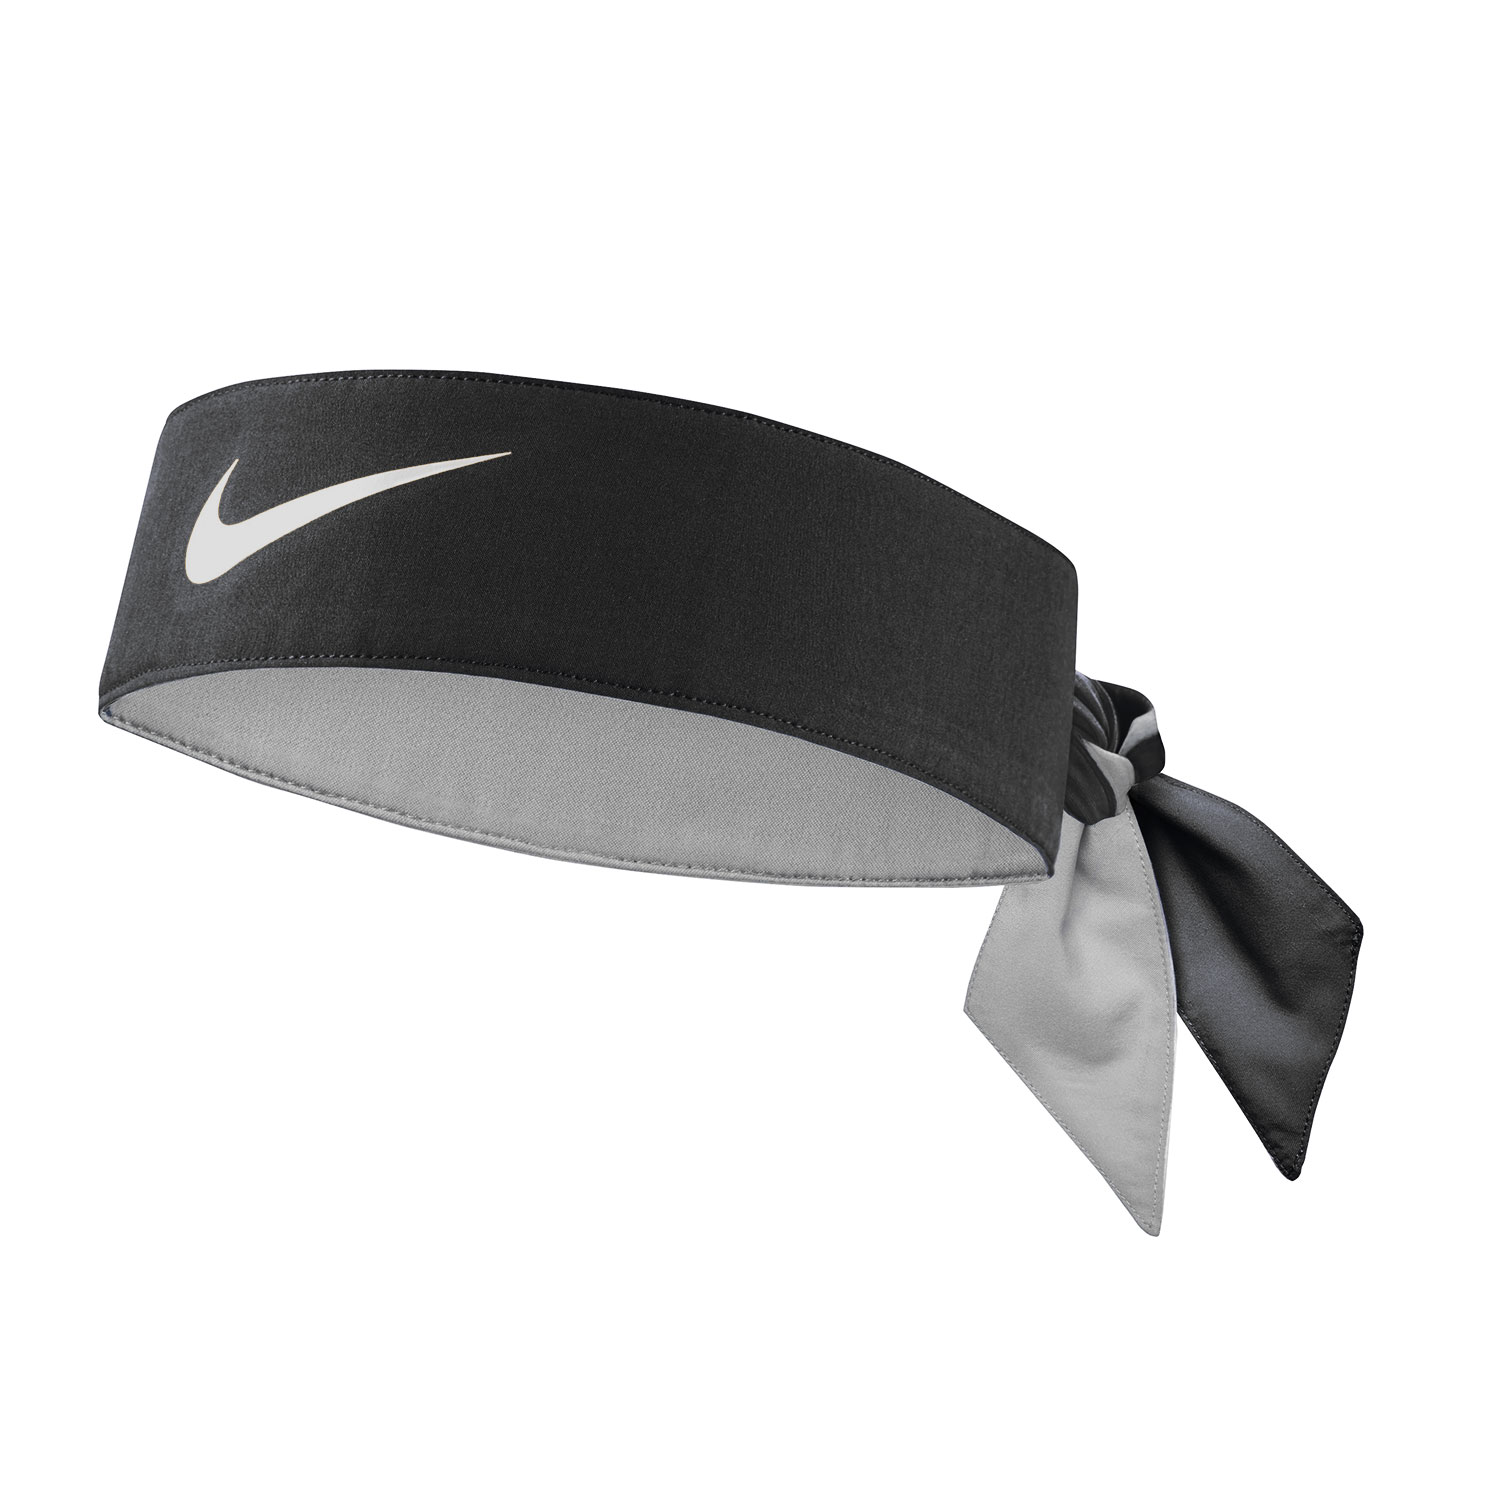 Nike Dry Headband - Black/White